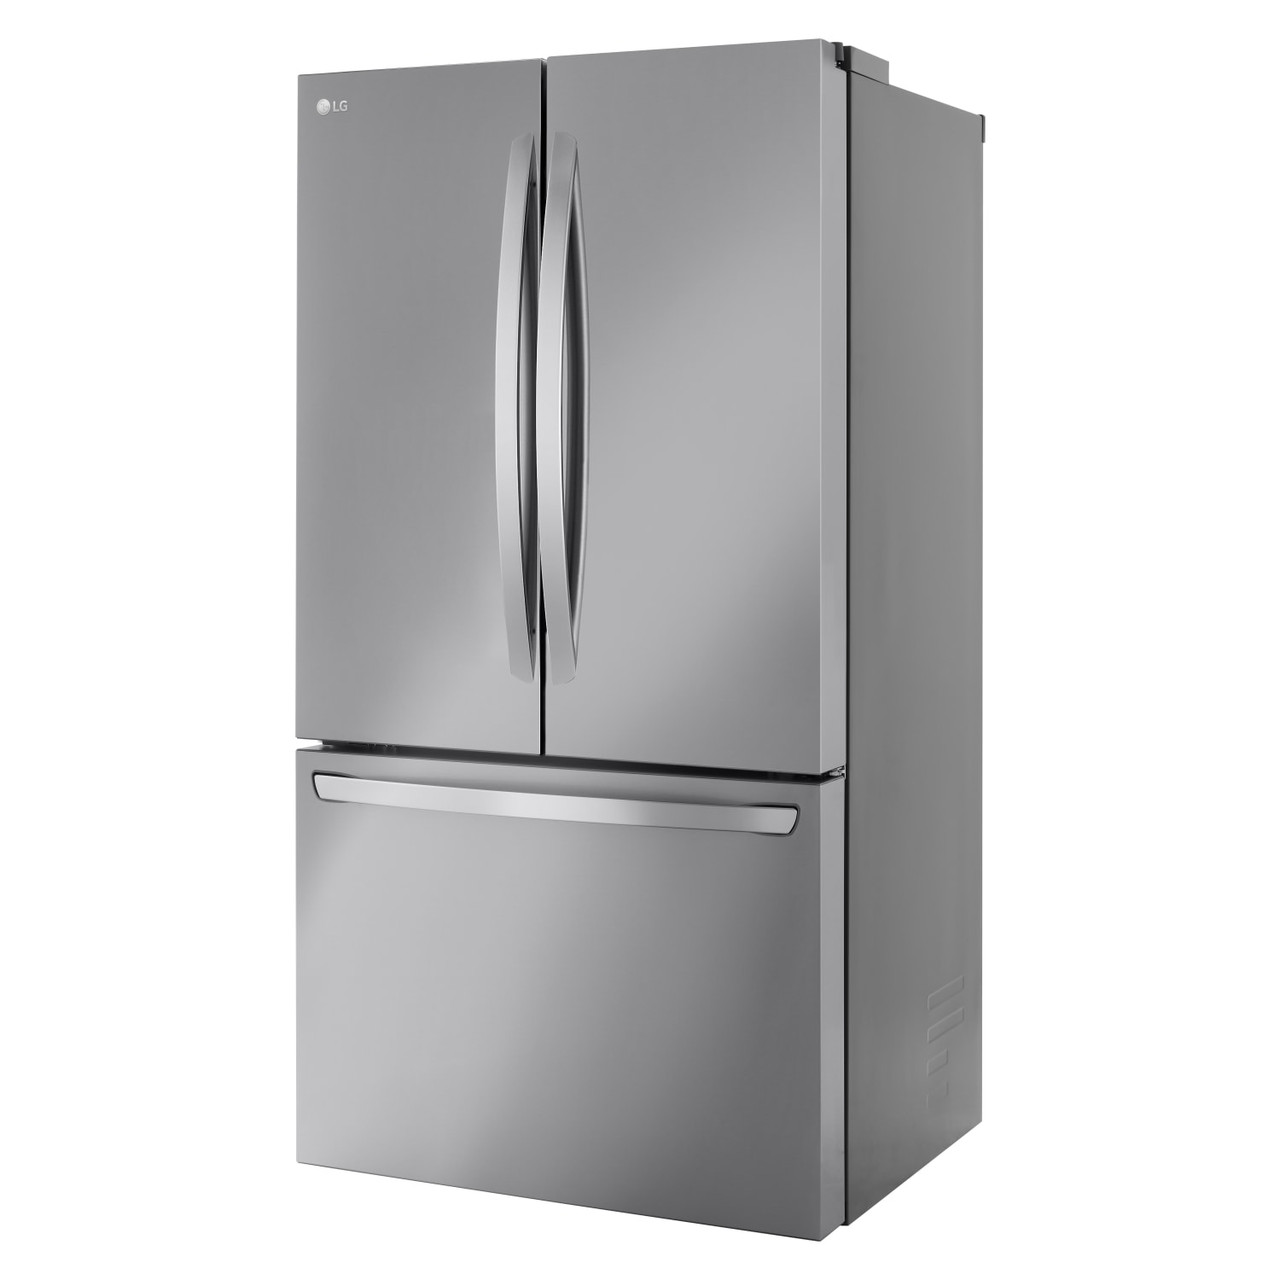 LG 27 cu. ft. Smart Counter-Depth Refrigerator - LRFLC2706S